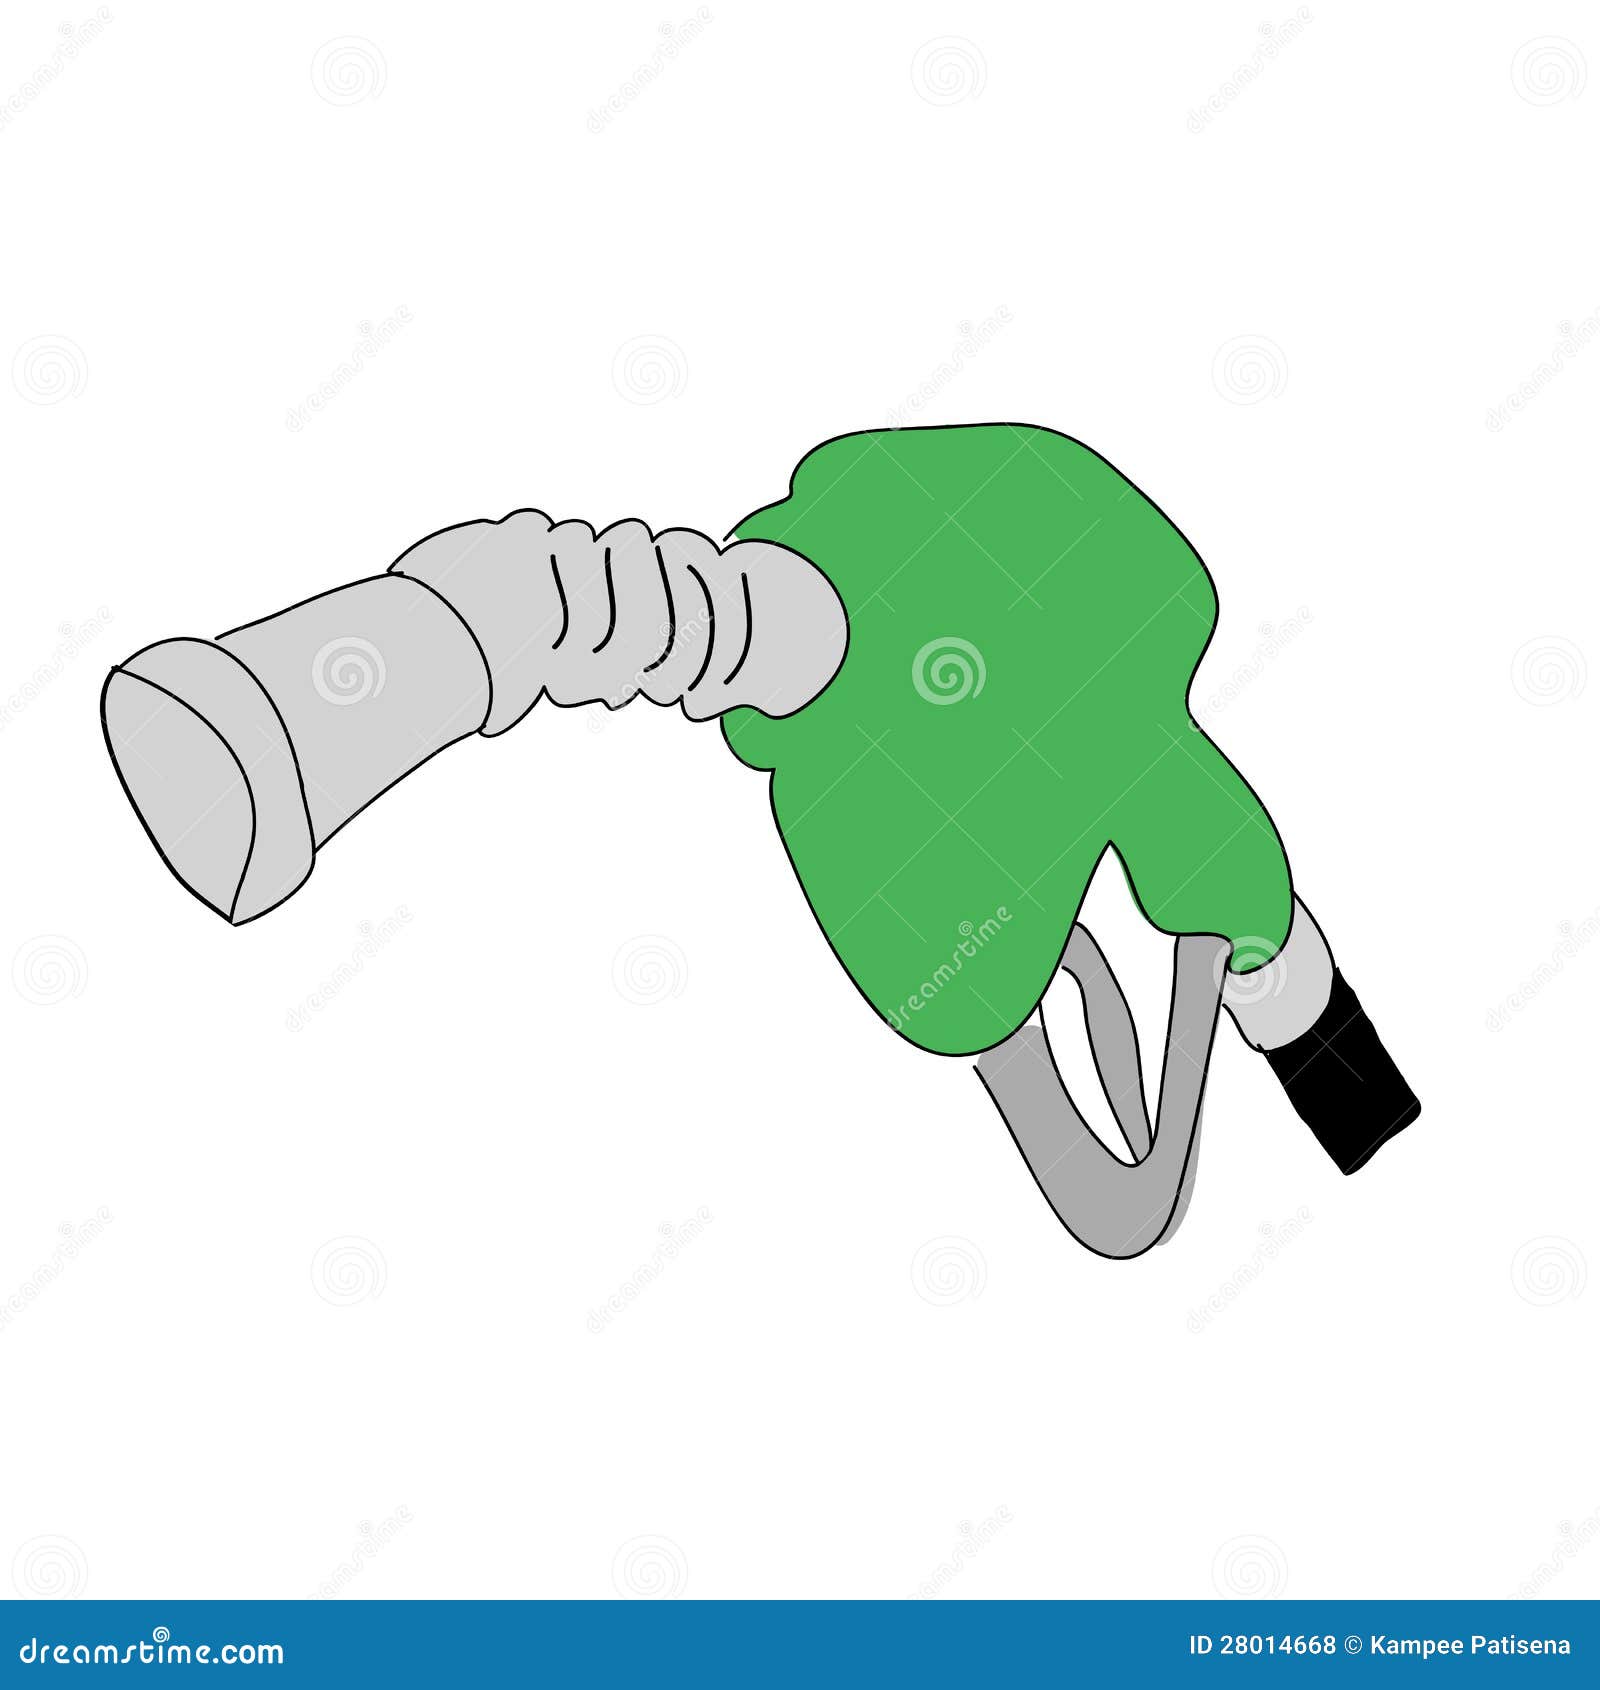 Fuel pump cartoon stock illustration. Illustration of petrol - 28014668